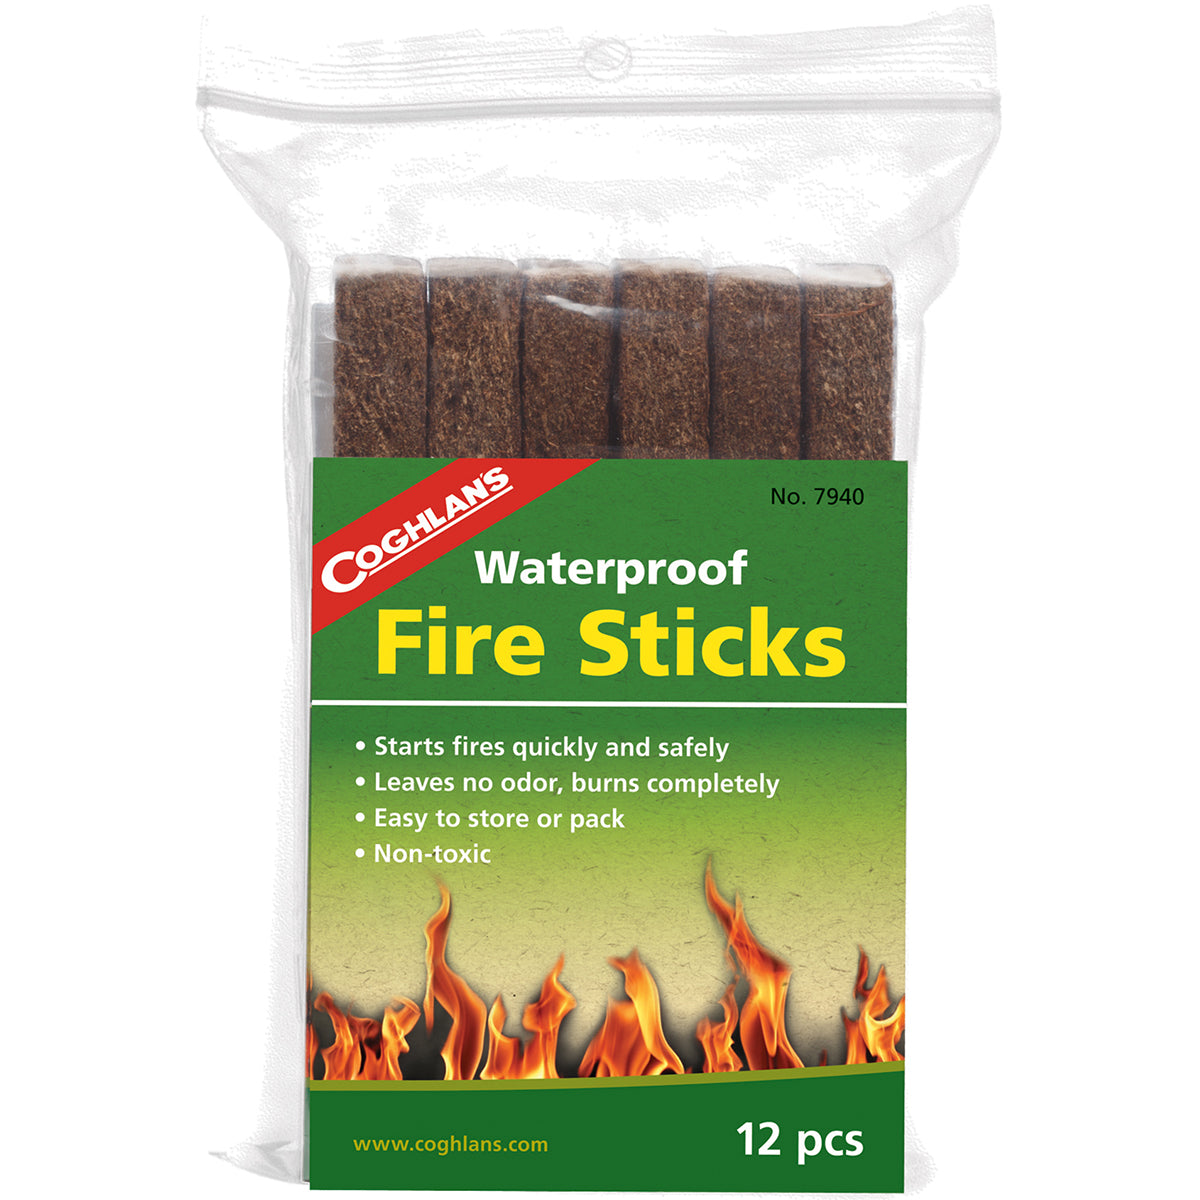 Coghlan's Waterproof Fire Sticks (12 Pack), Non-toxic Odorless Survival Emergency Coghlan's